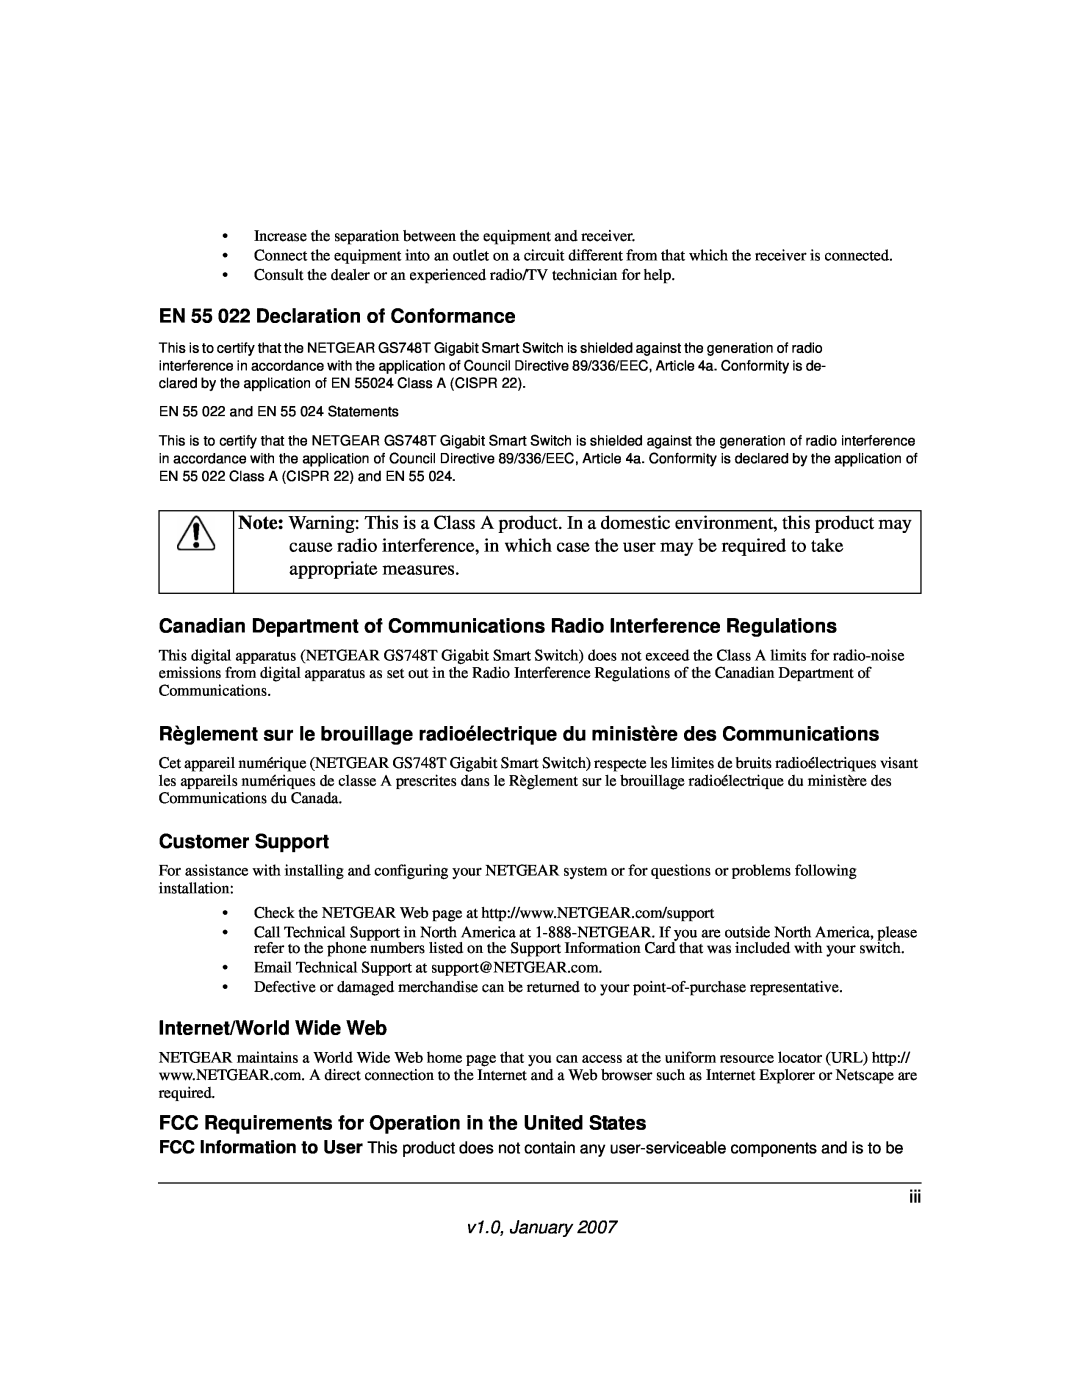 NETGEAR GS748T EN 55 022 Declaration of Conformance, Canadian Department of Communications Radio Interference Regulations 